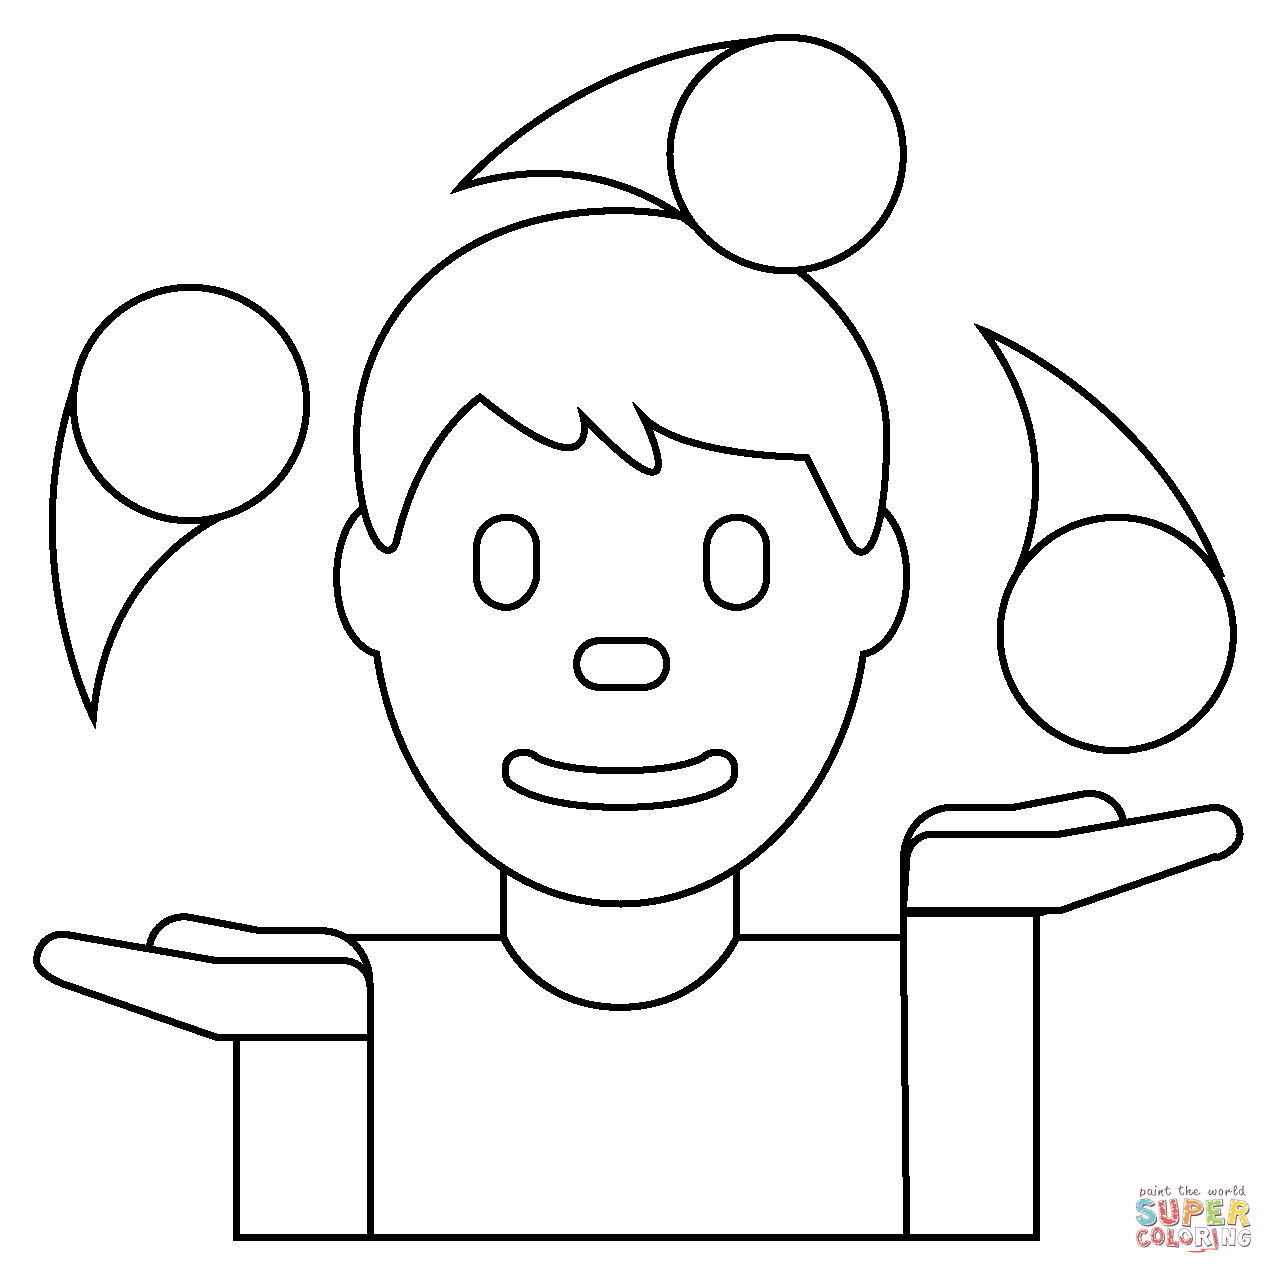 Man juggling emoji coloring page free printable coloring pages